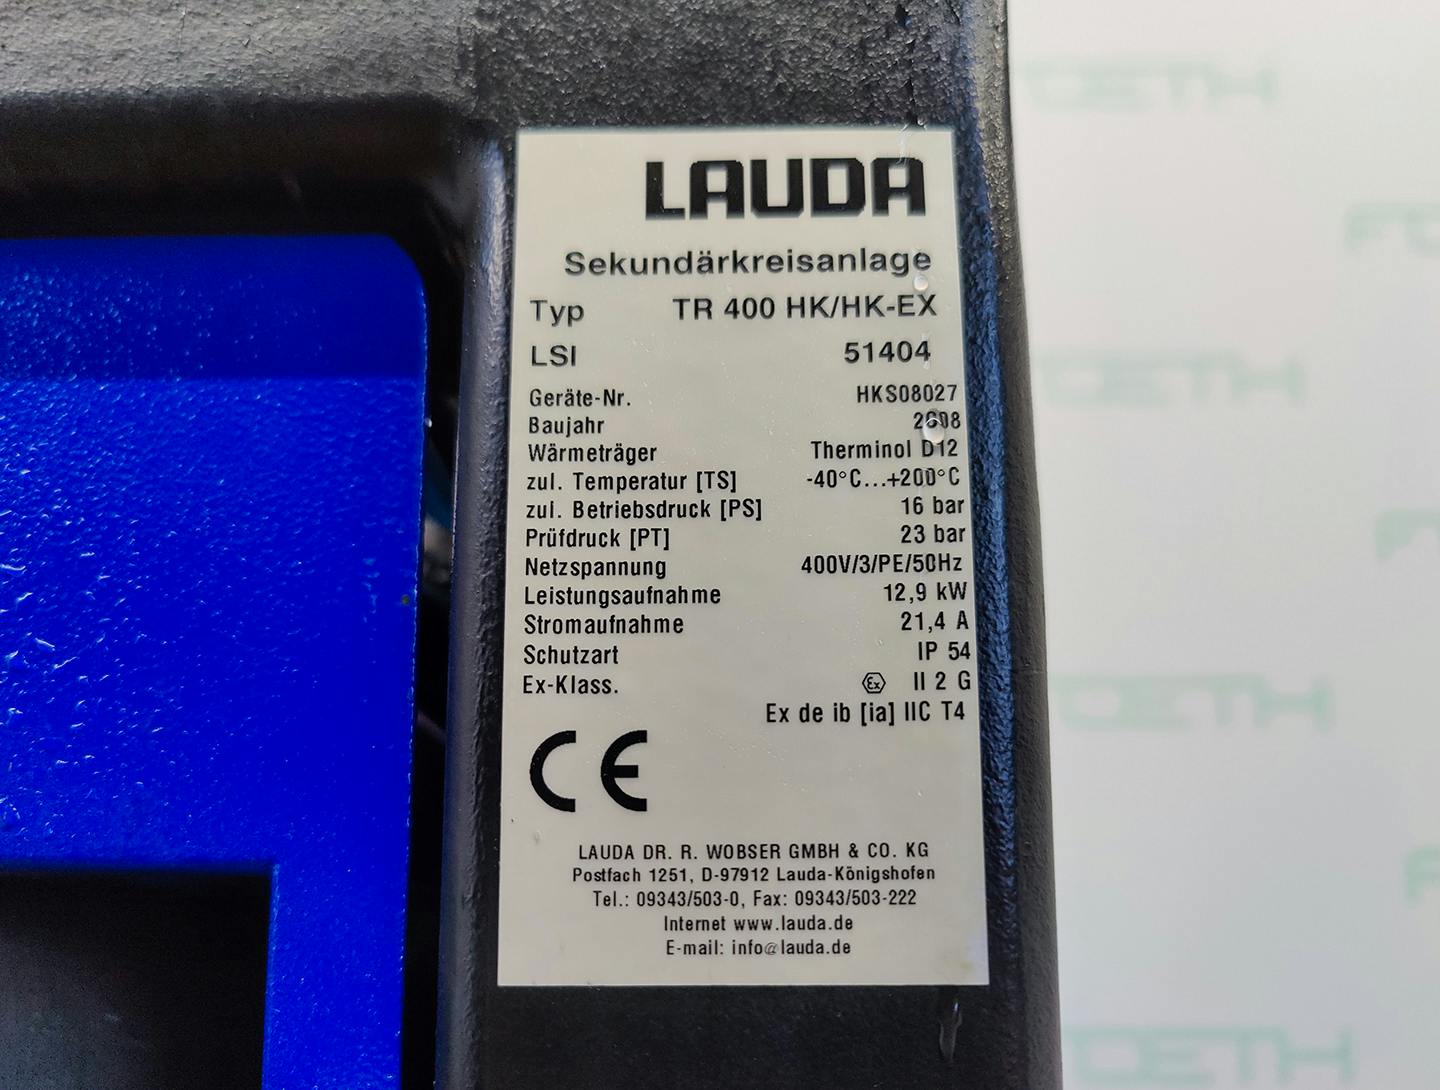 Lauda TR400 HK/HK-EX "secondary circuit system" - Temperiergerät - image 6